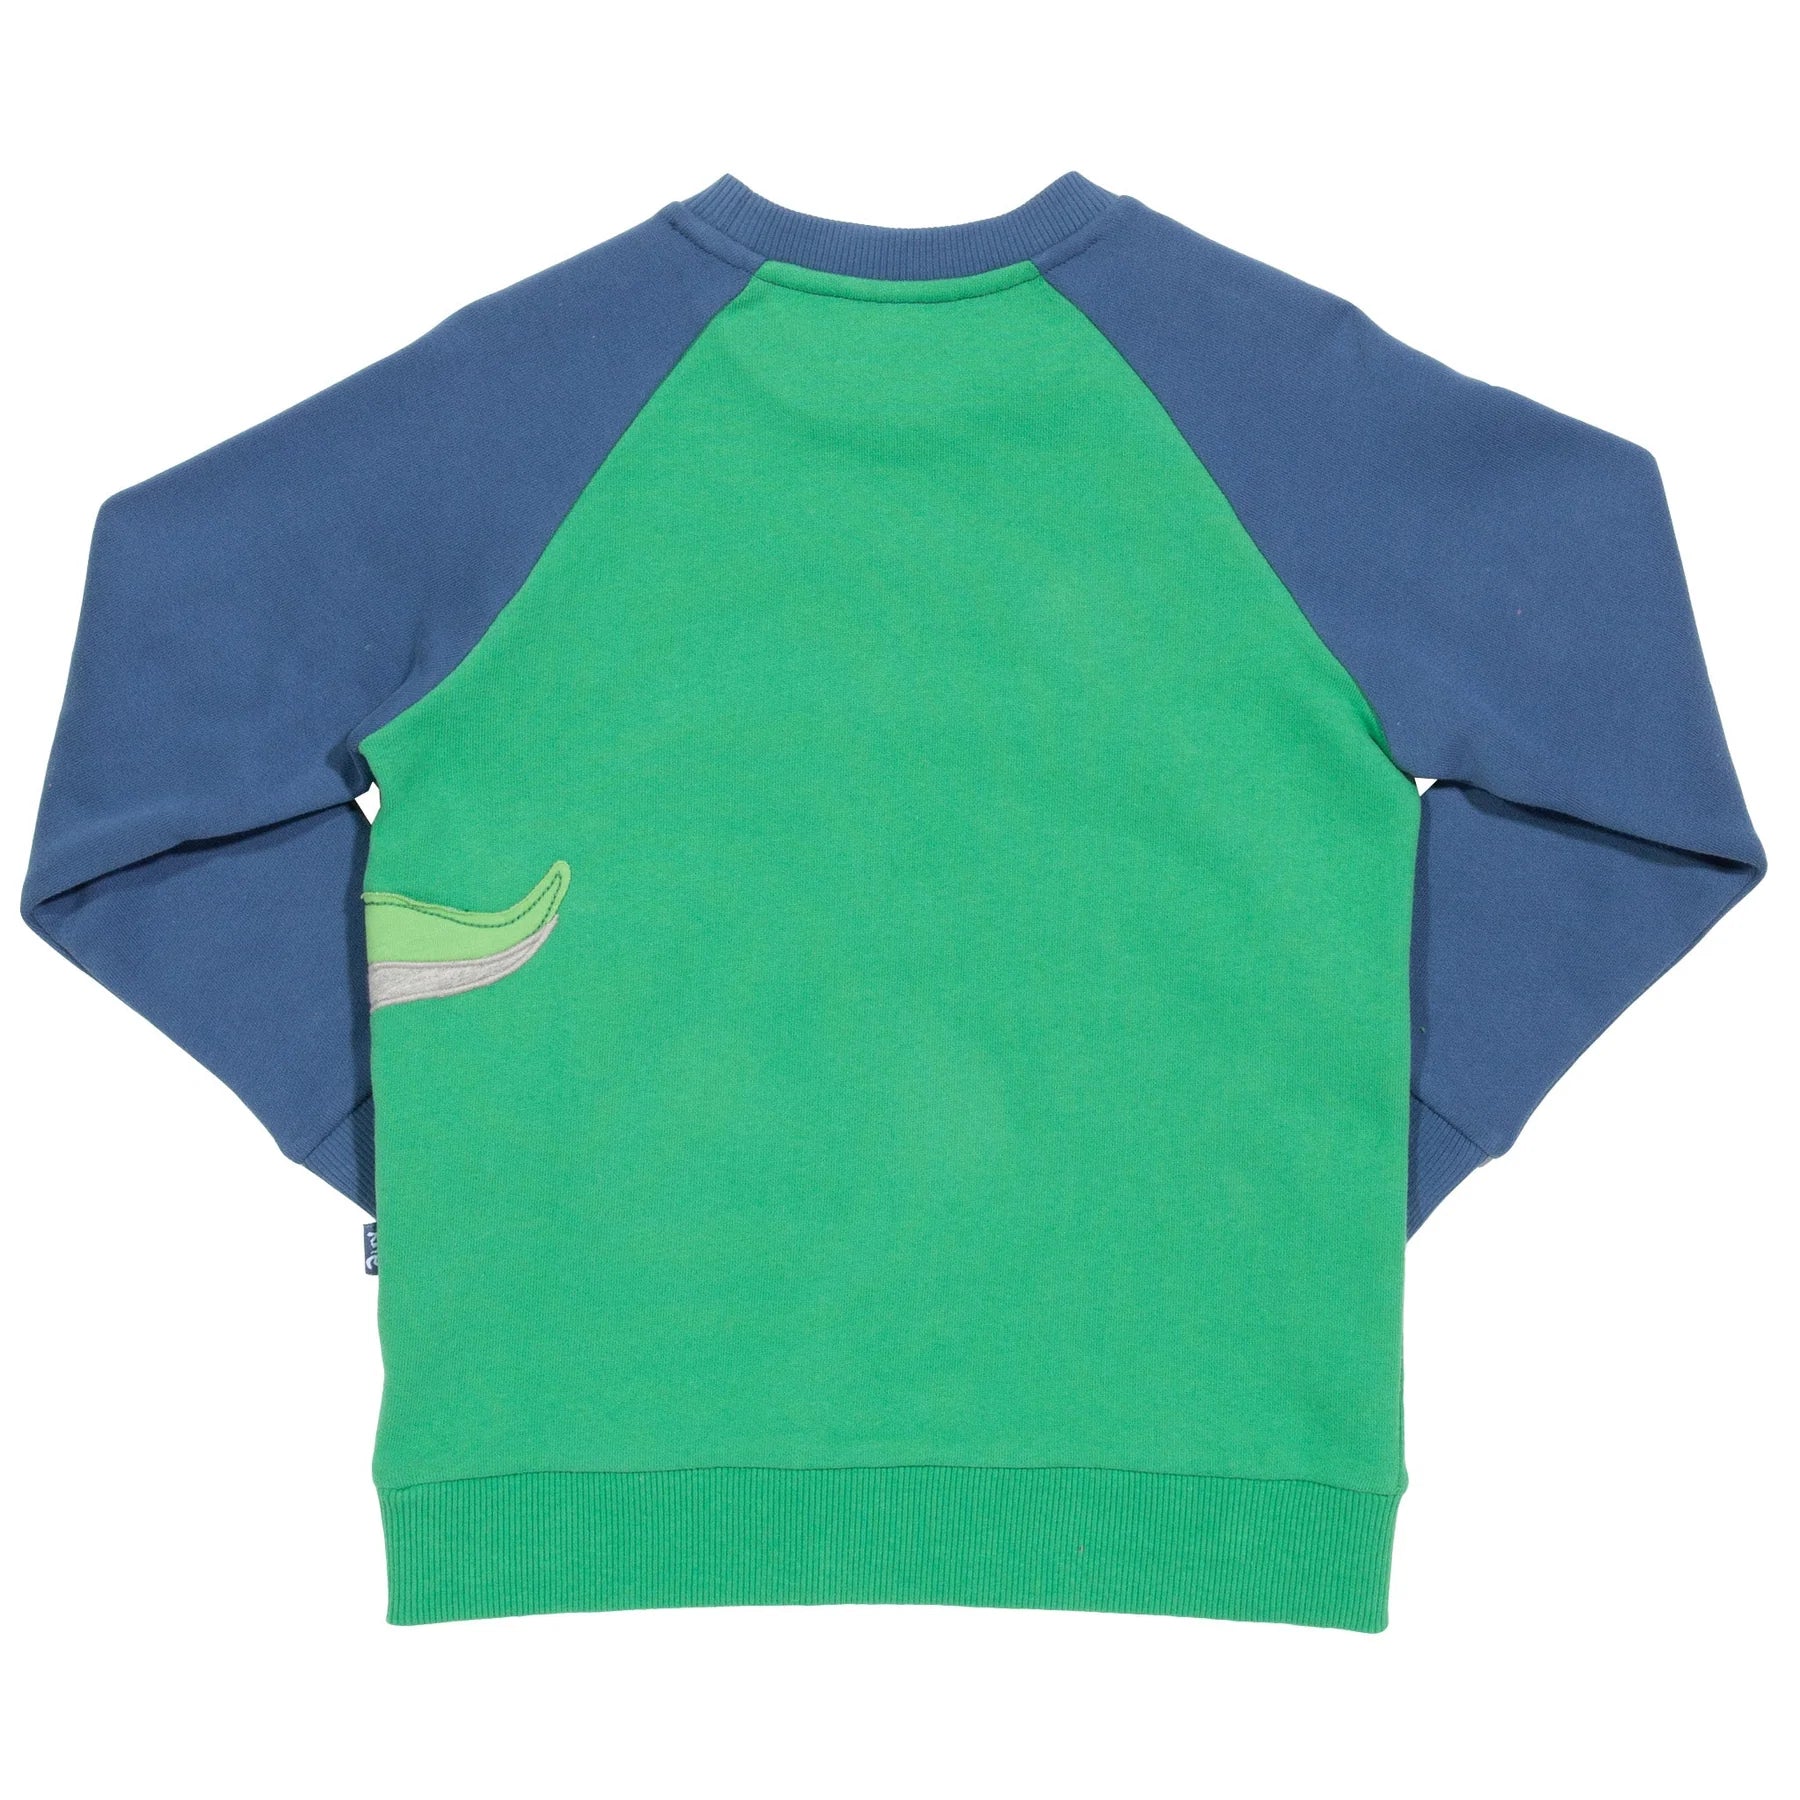 Kite T-Rex Sweatshirt